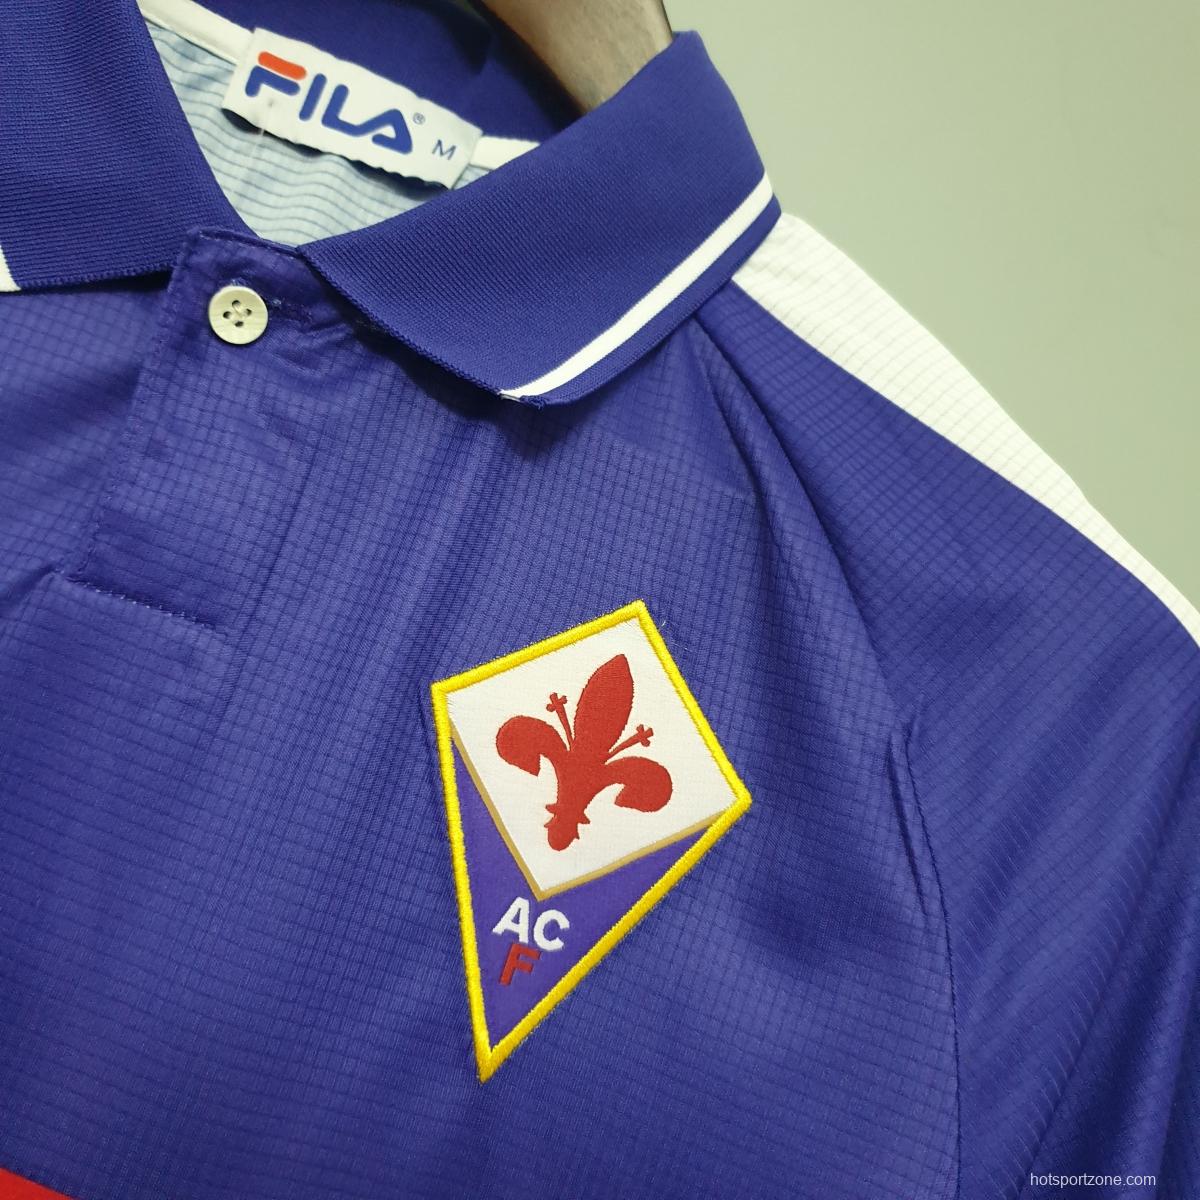 Vintage Fiorentina 1998 home Soccer Jersey